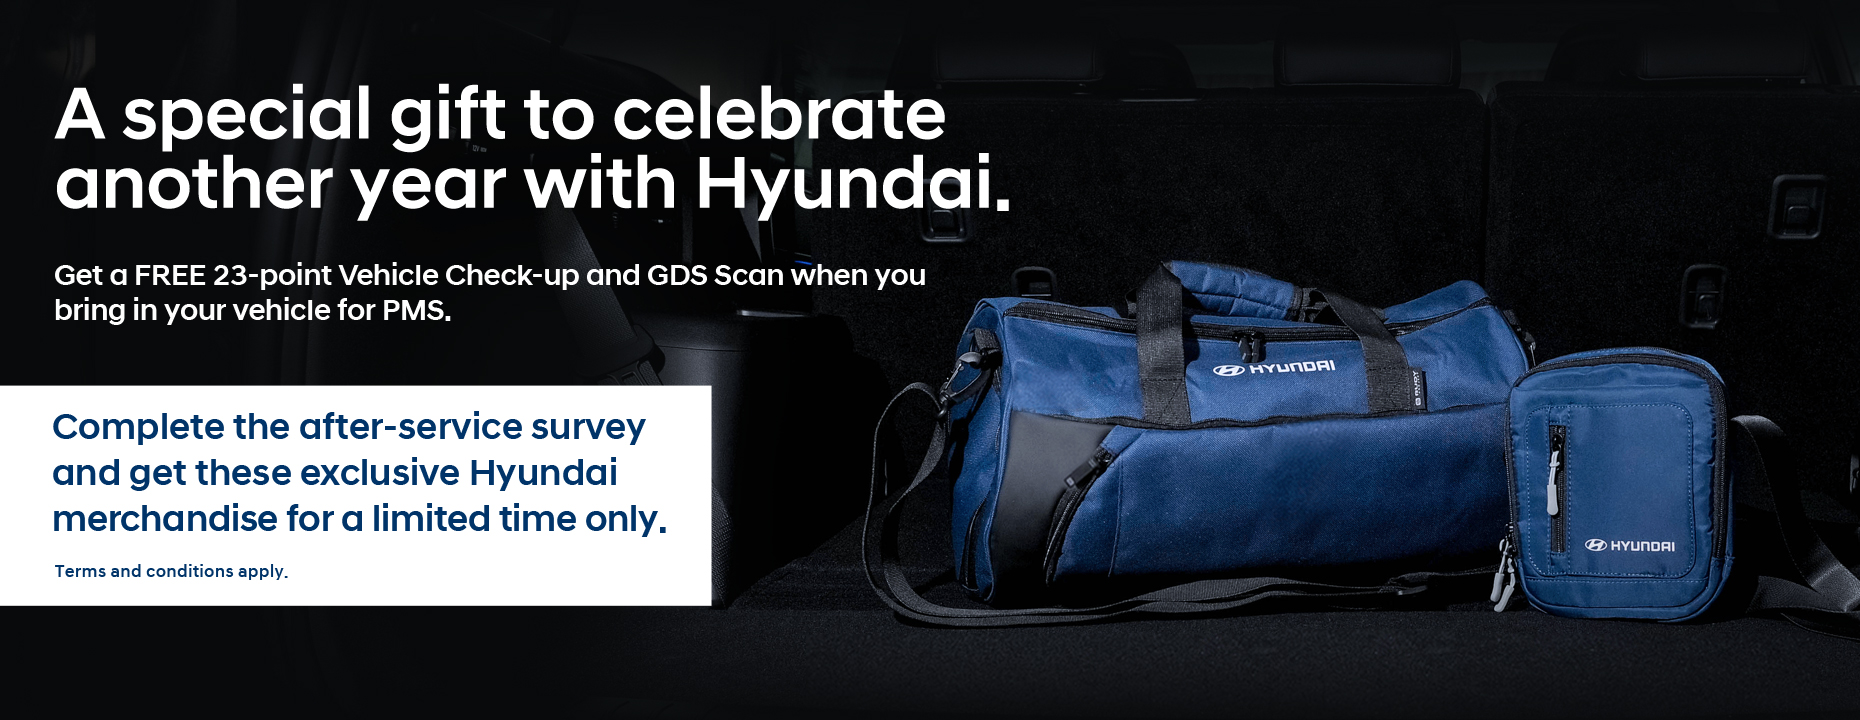 hyundai anniversary promo bags